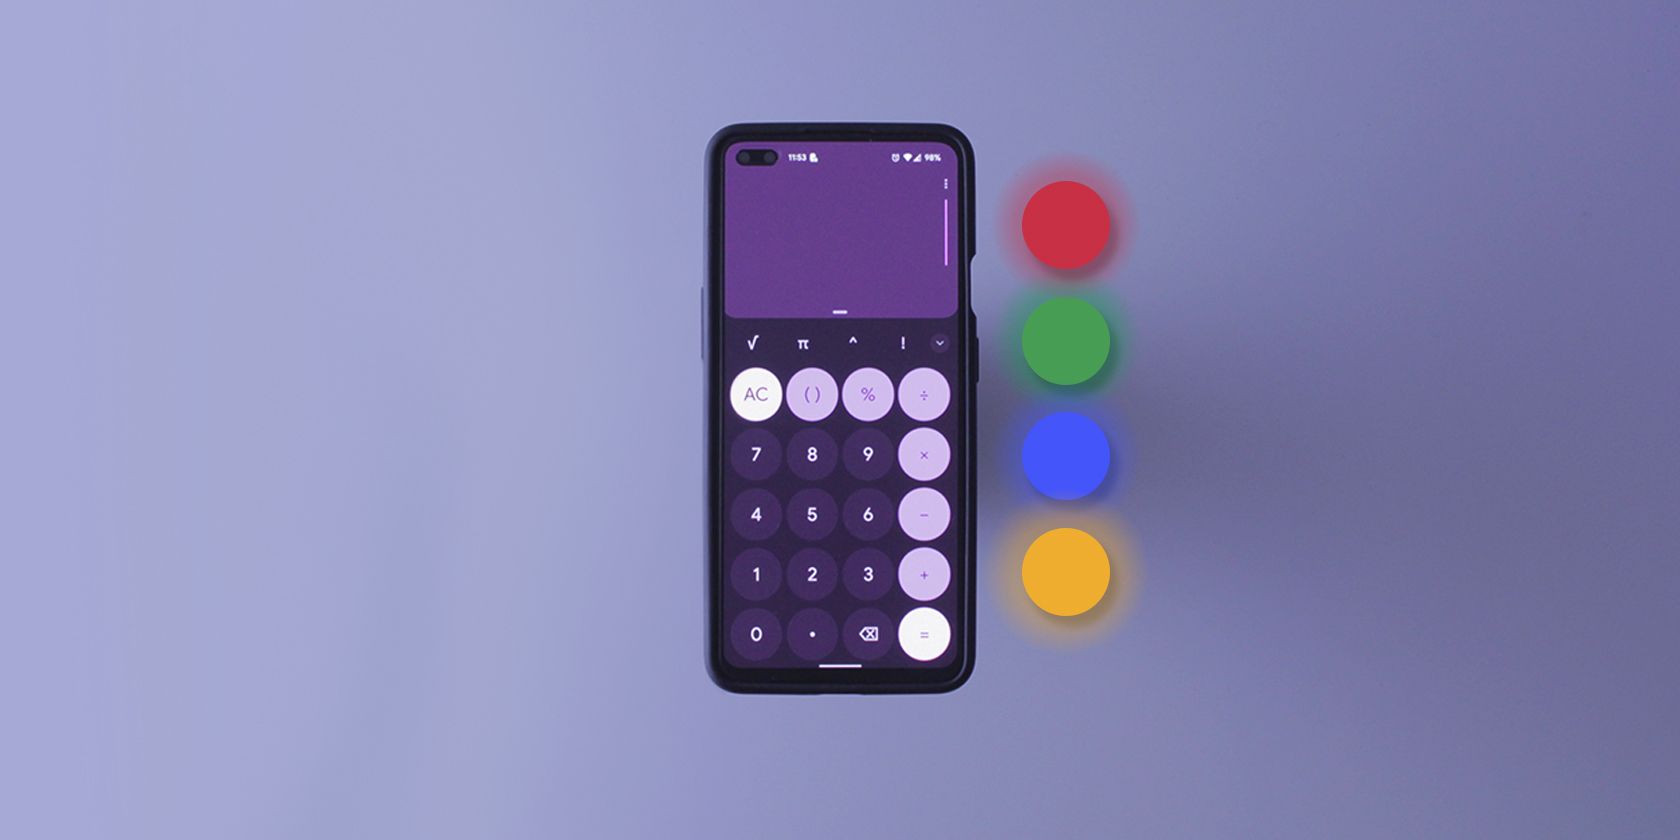 Calculator app with a purple accent color